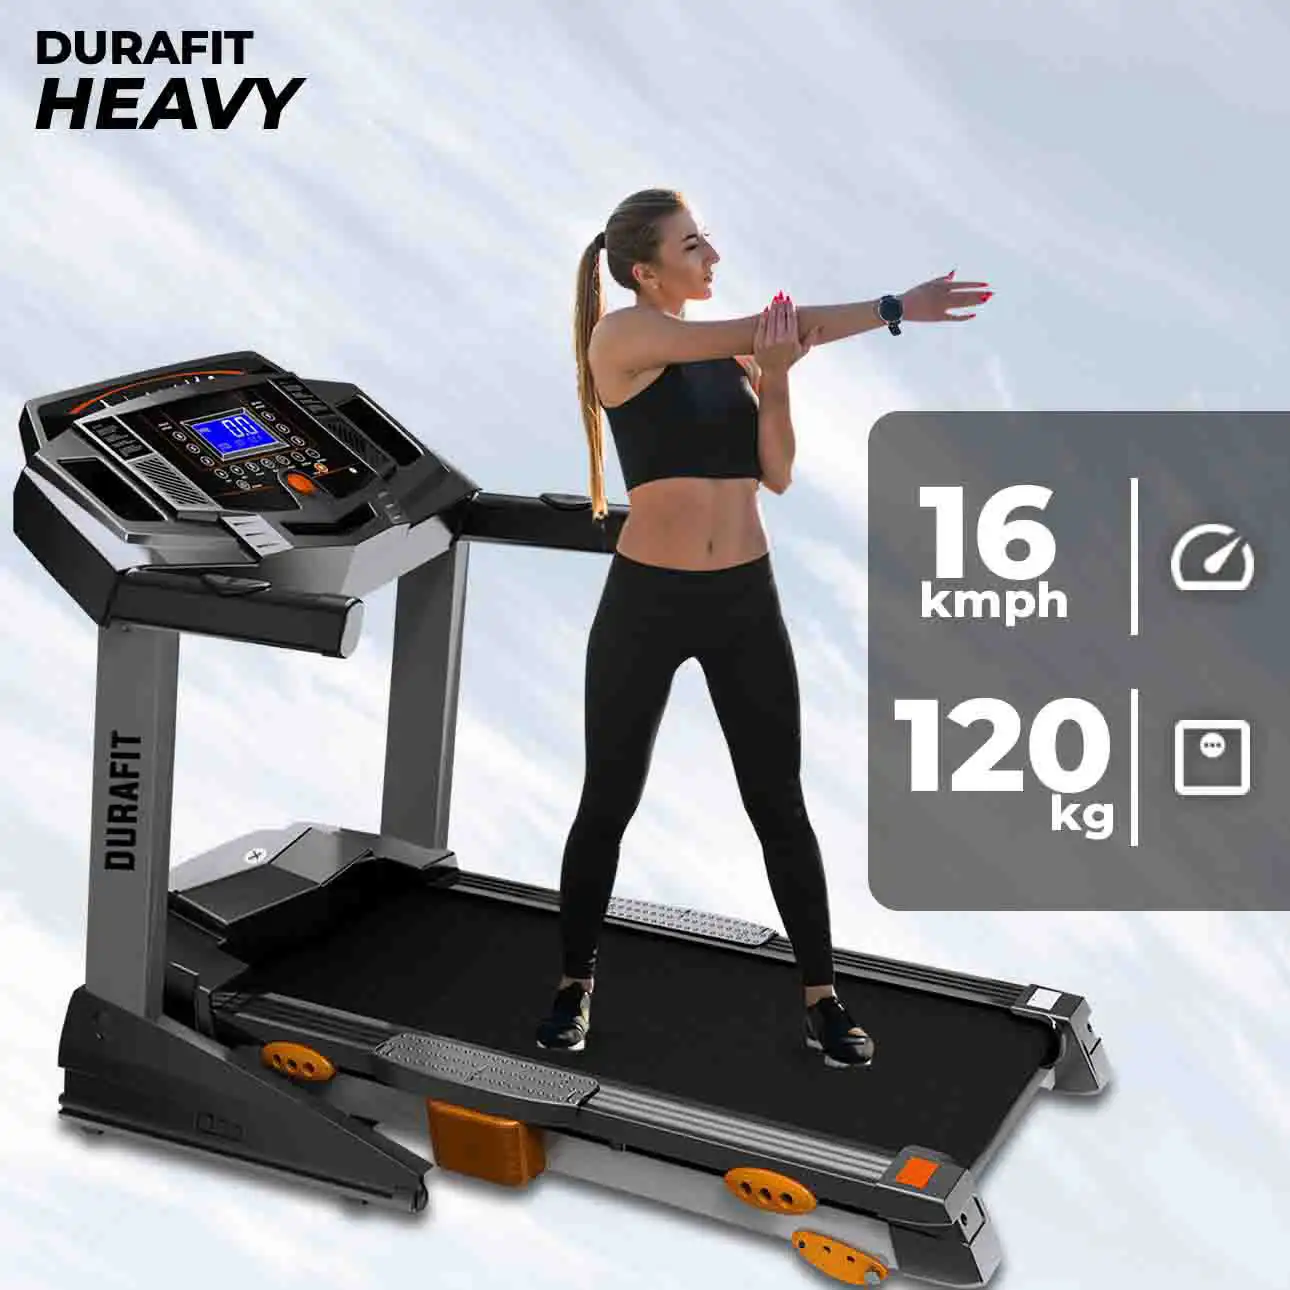 Durafit Heavy Treadmill with 16kmph running speed